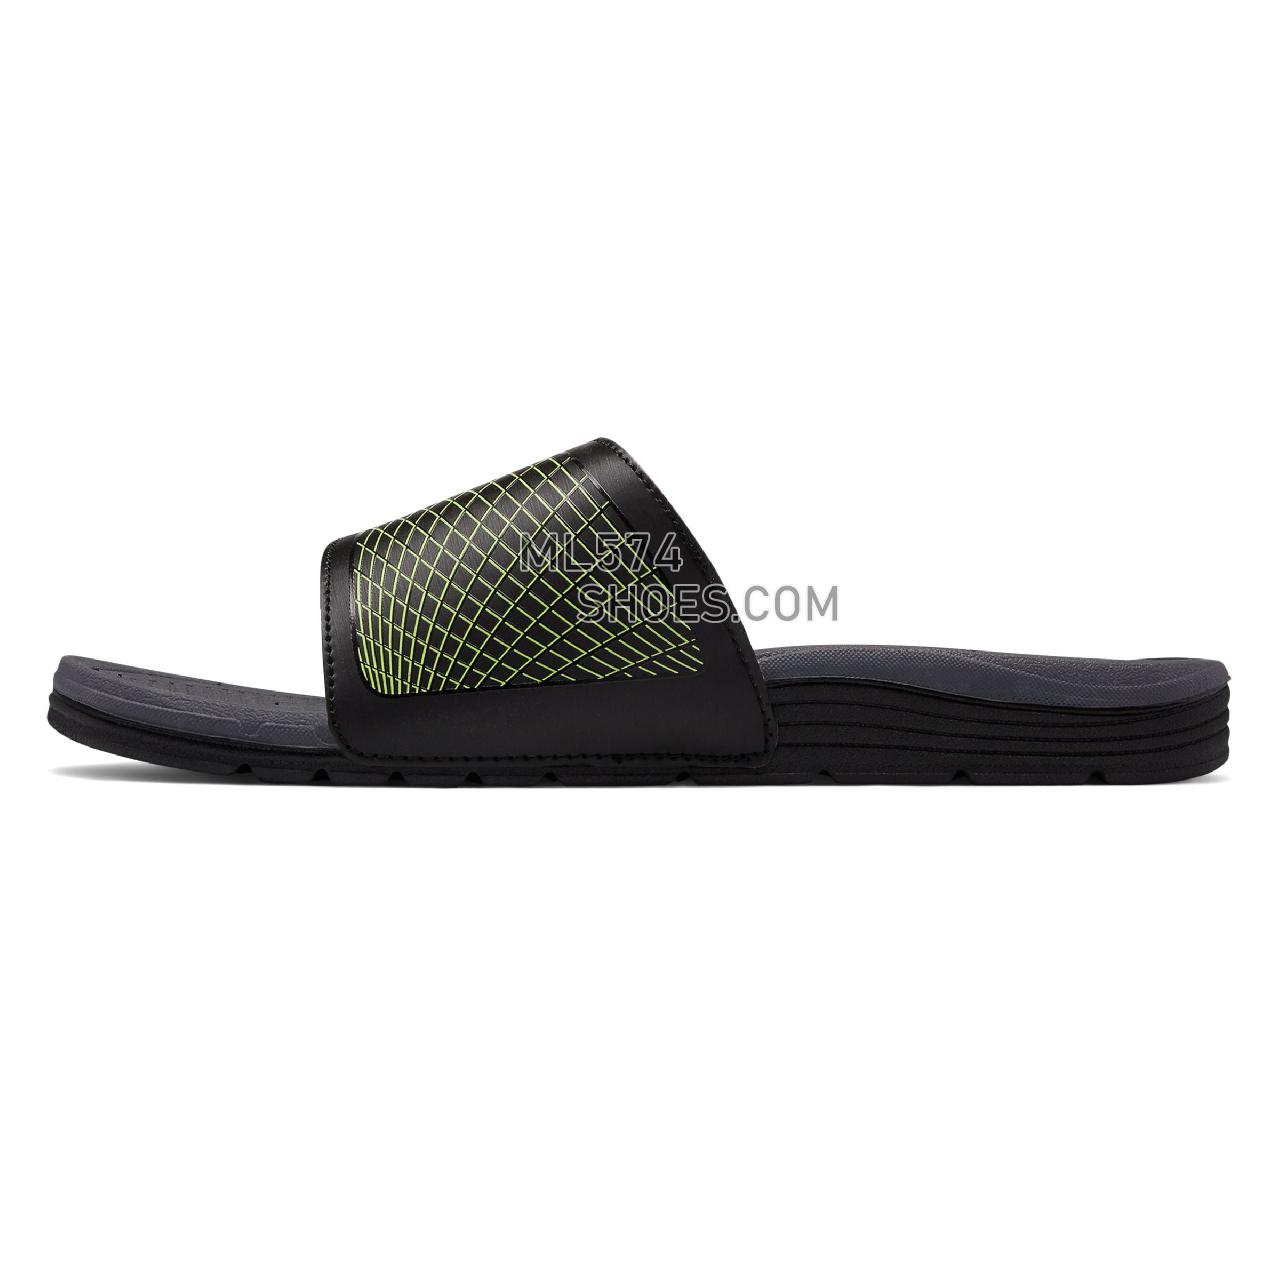 New Balance Cush+ Slide - Men's 3064 - Sandals Black with Hi-Lite - M3064BKG